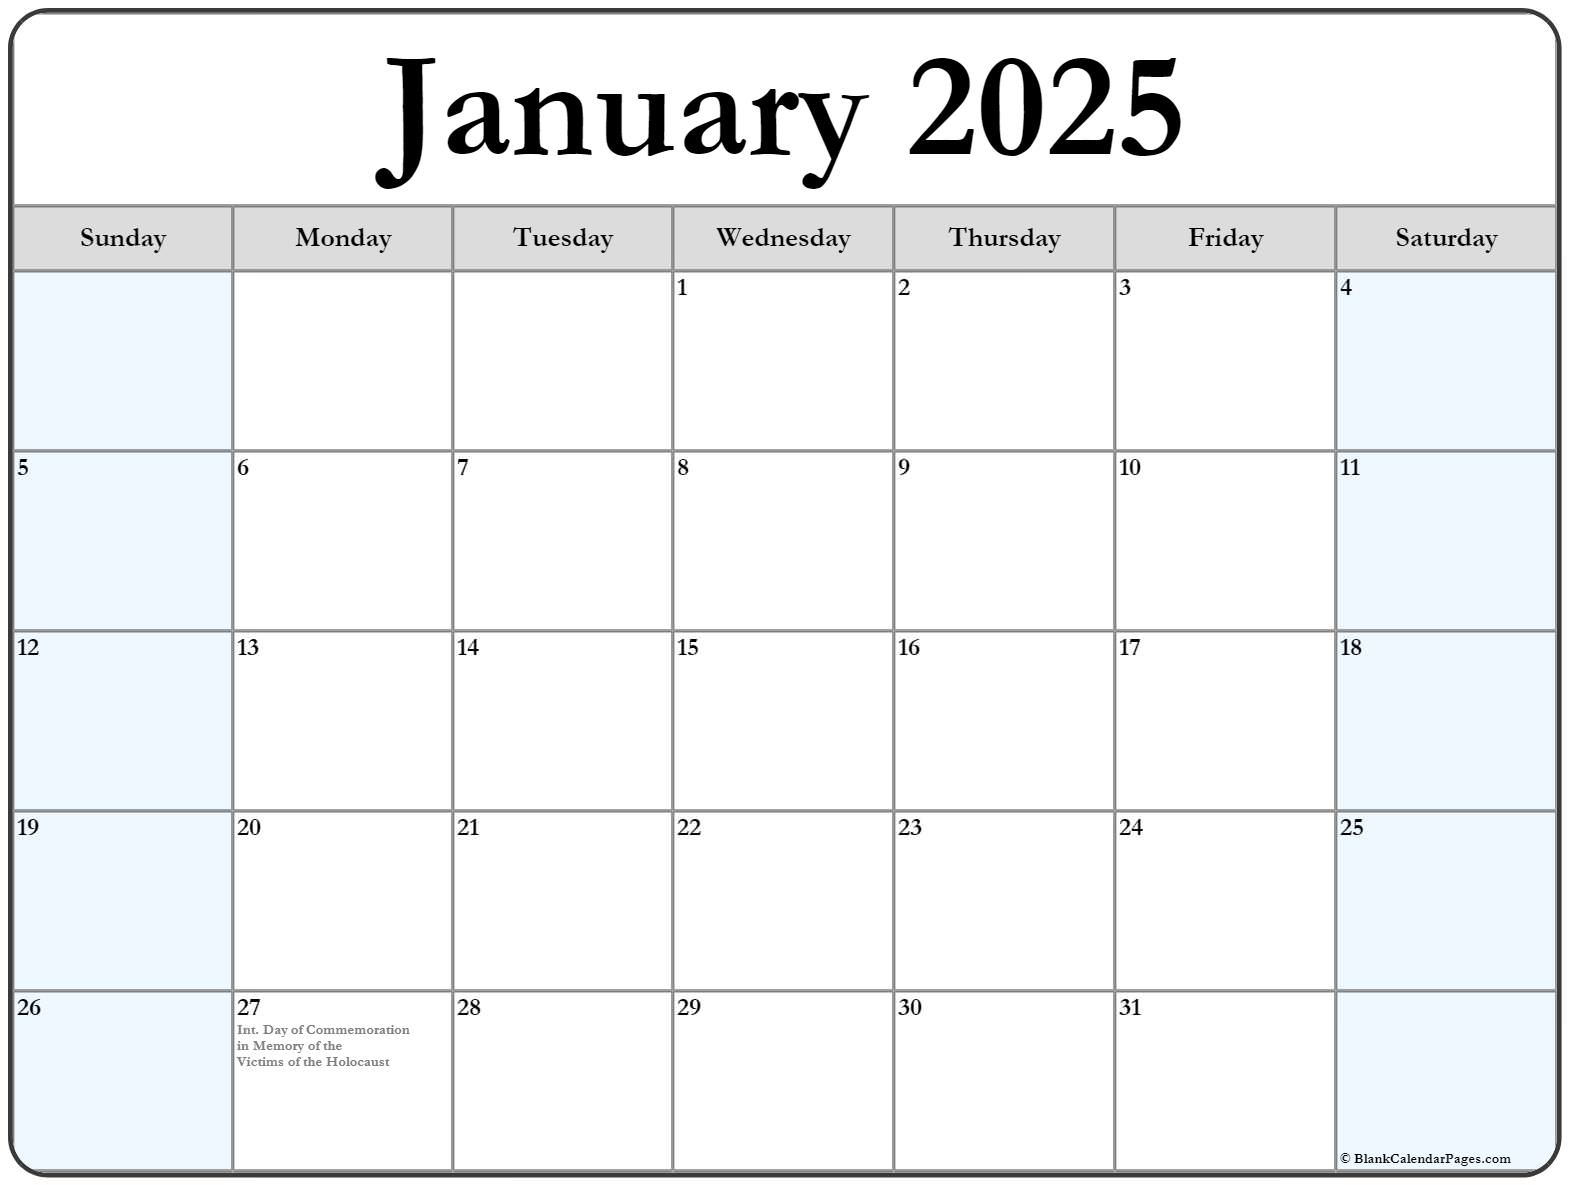 January 2025 Blank Calendar vrogue.co